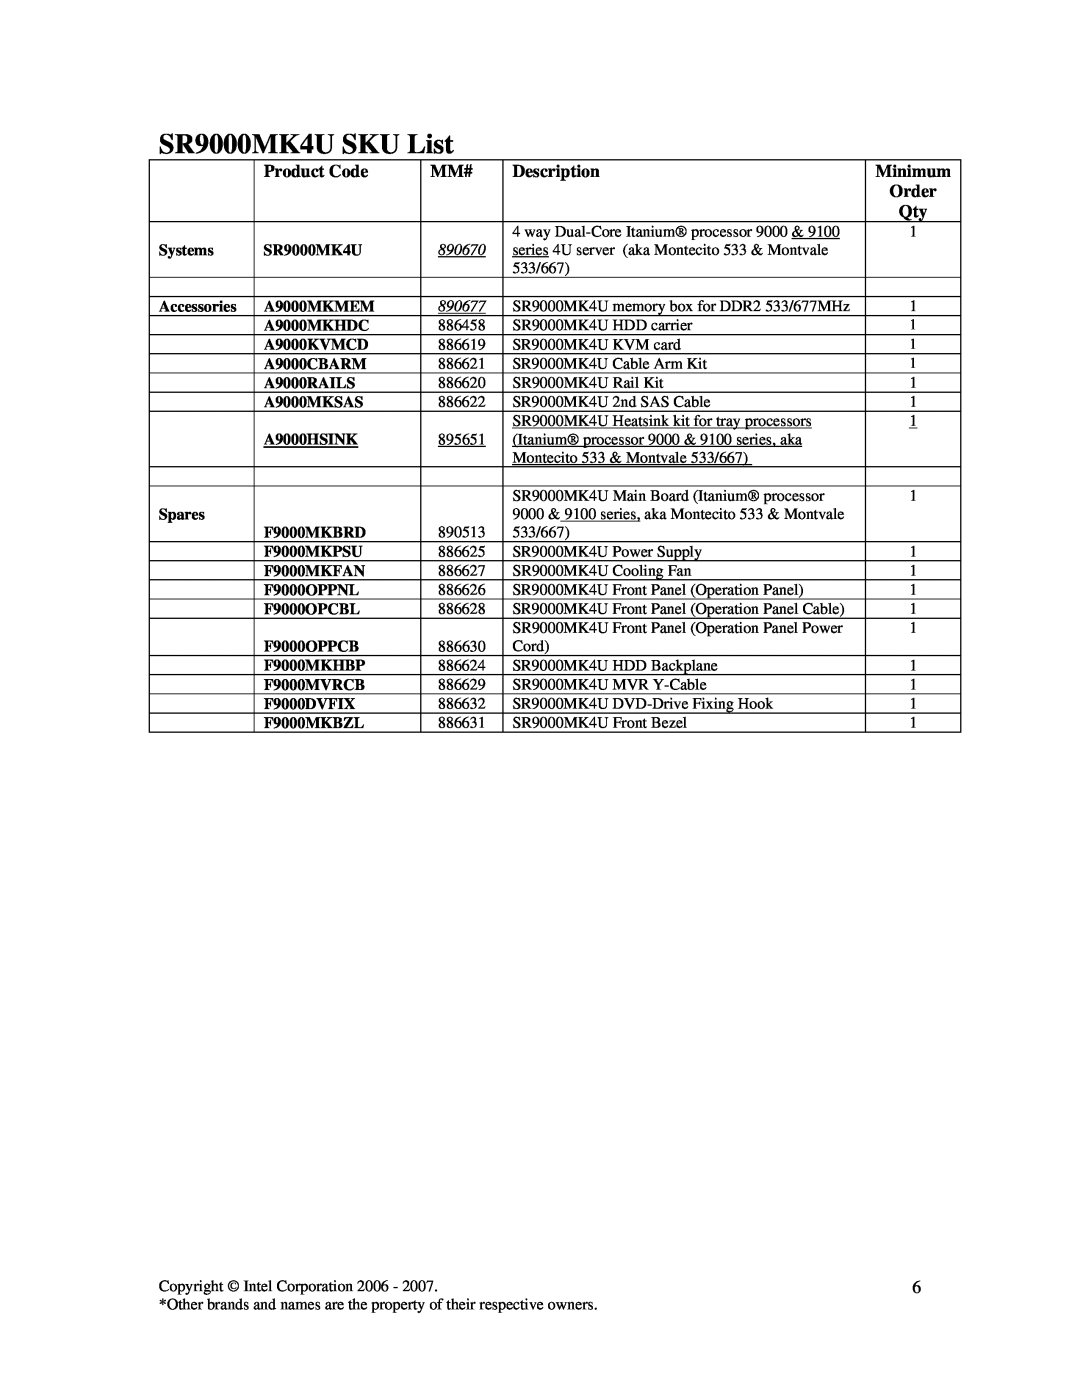 Intel warranty SR9000MK4U SKU List, Product Code, Description, Minimum, Order, 890670, 890677 